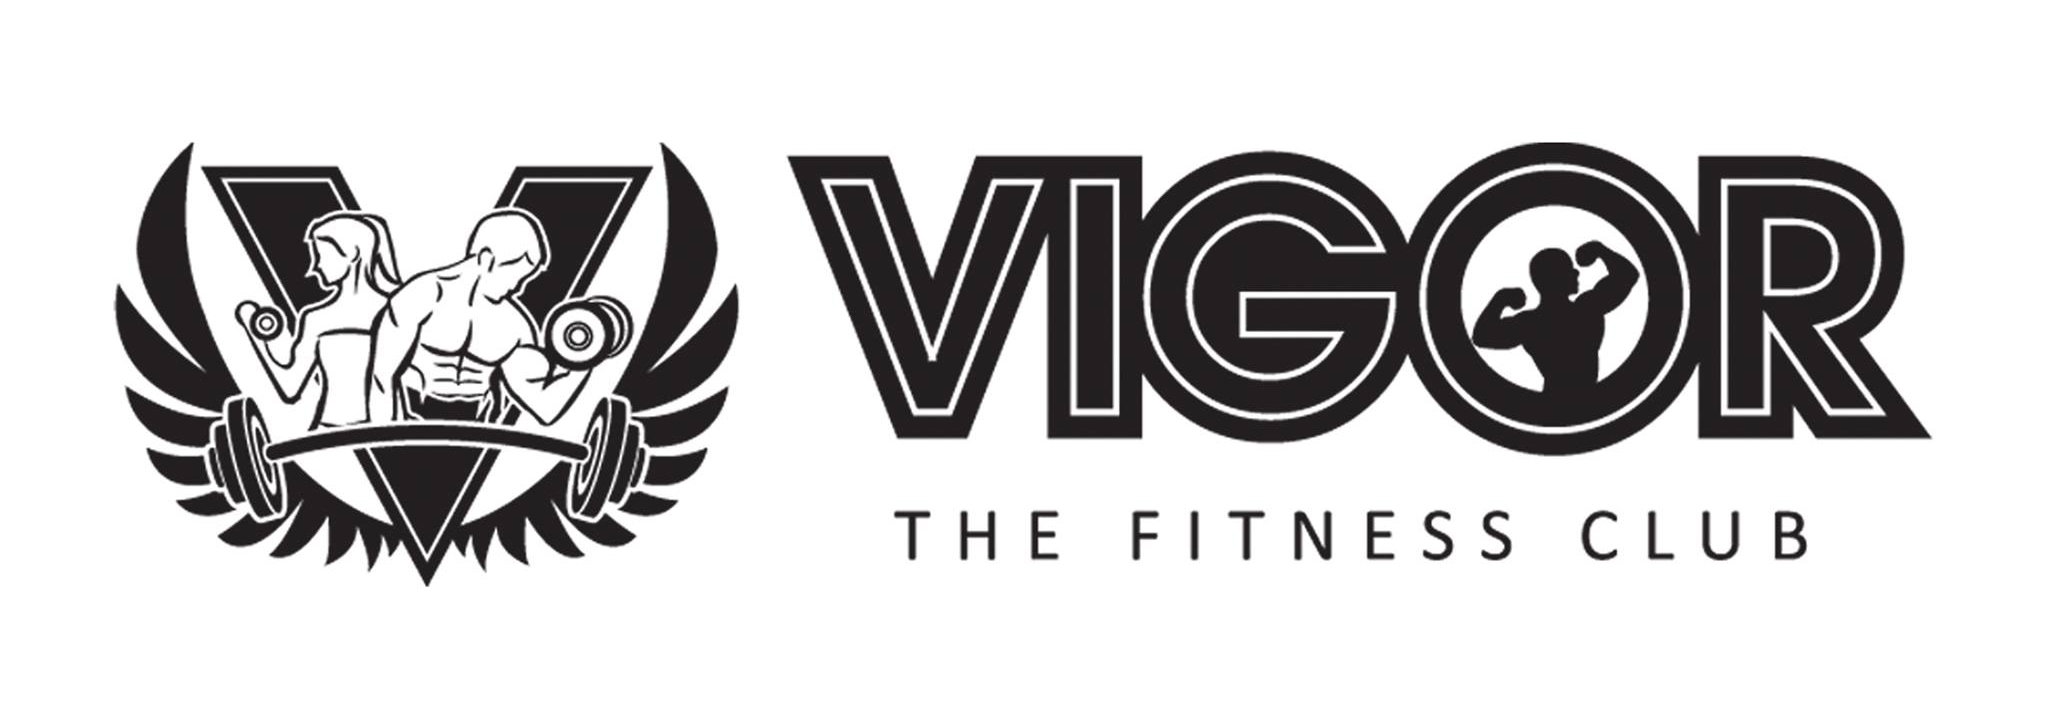 VIGOR THE FITNESS CLUB - Logo